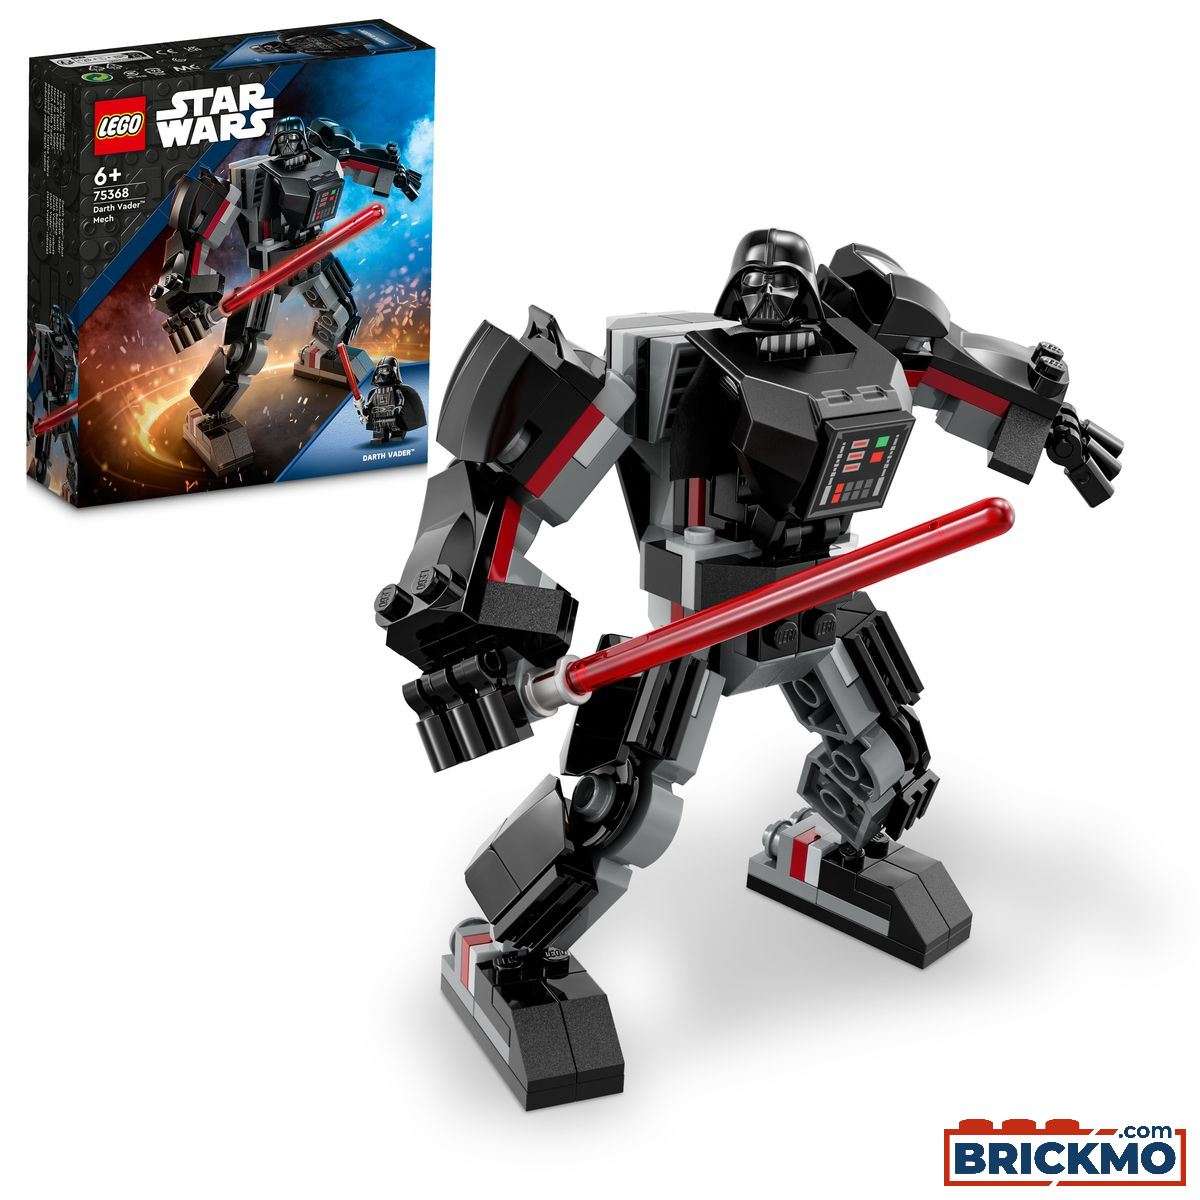 LEGO Star Wars 75368 Darth Vader mecha 75368